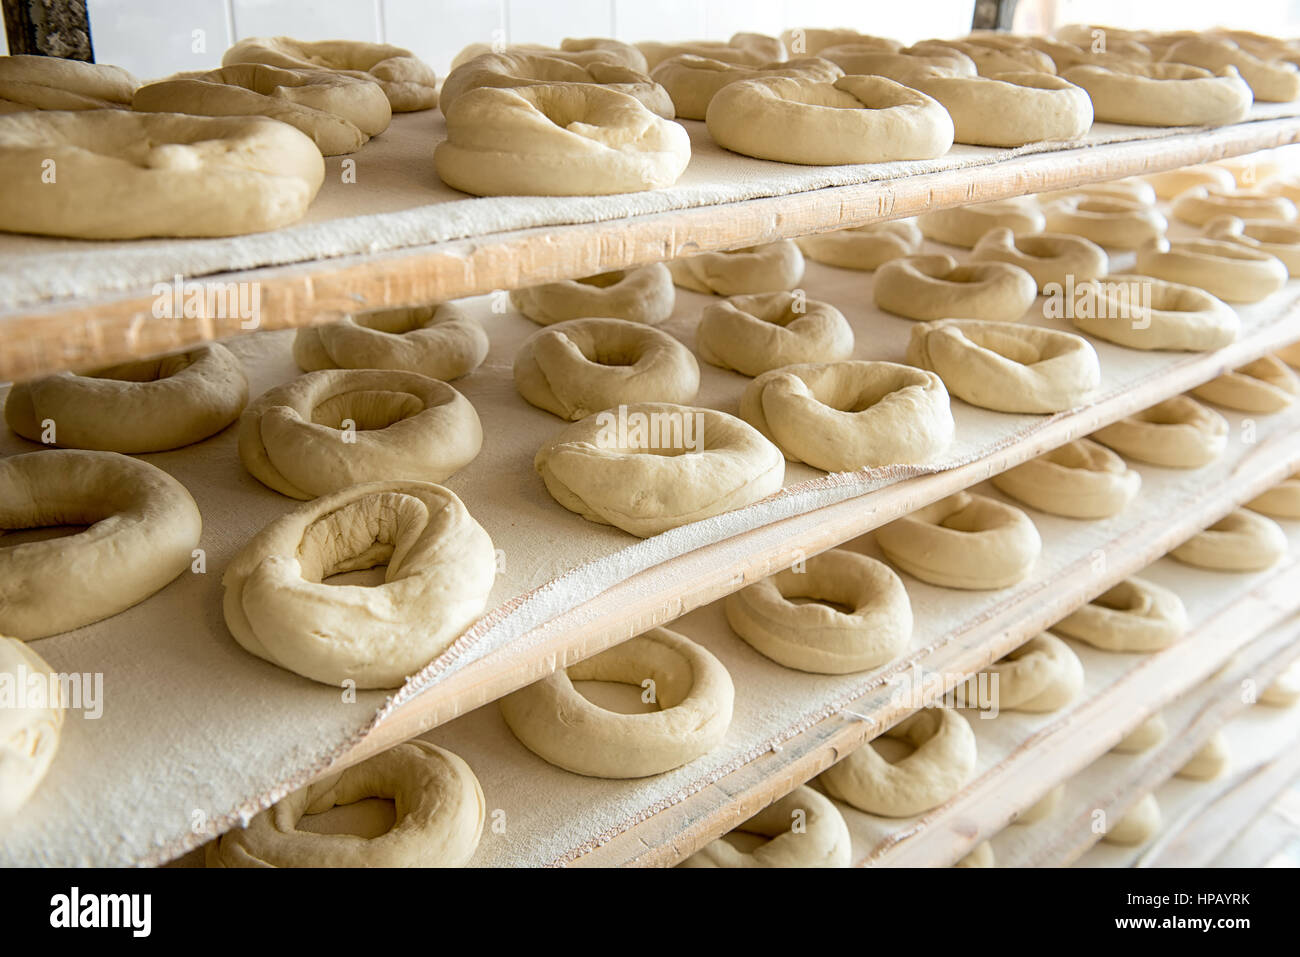 Uncooked frisella bread dough proving on wooden shelves of Italian bakery, full frame image Stock Photo